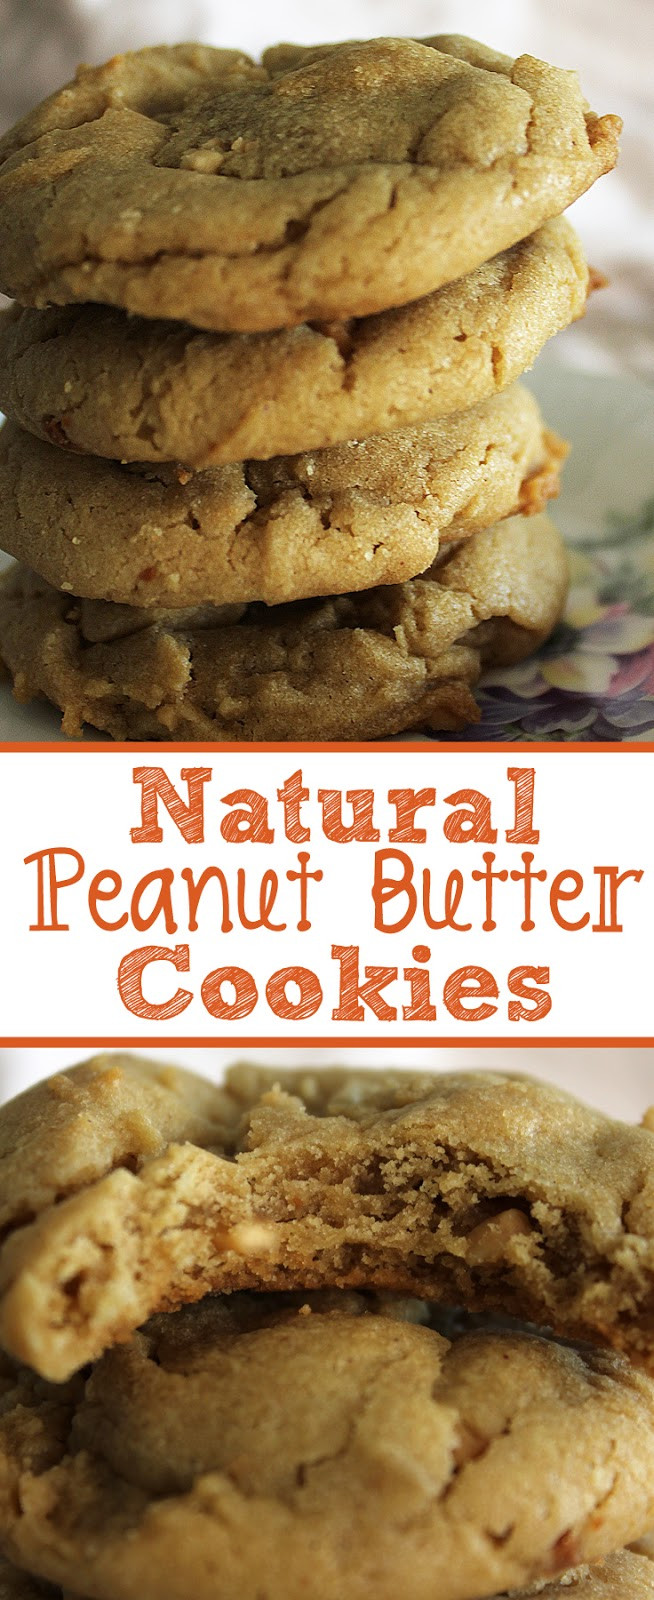 Organic Peanut Butter Cookies
 Natural Peanut Butter Cookies